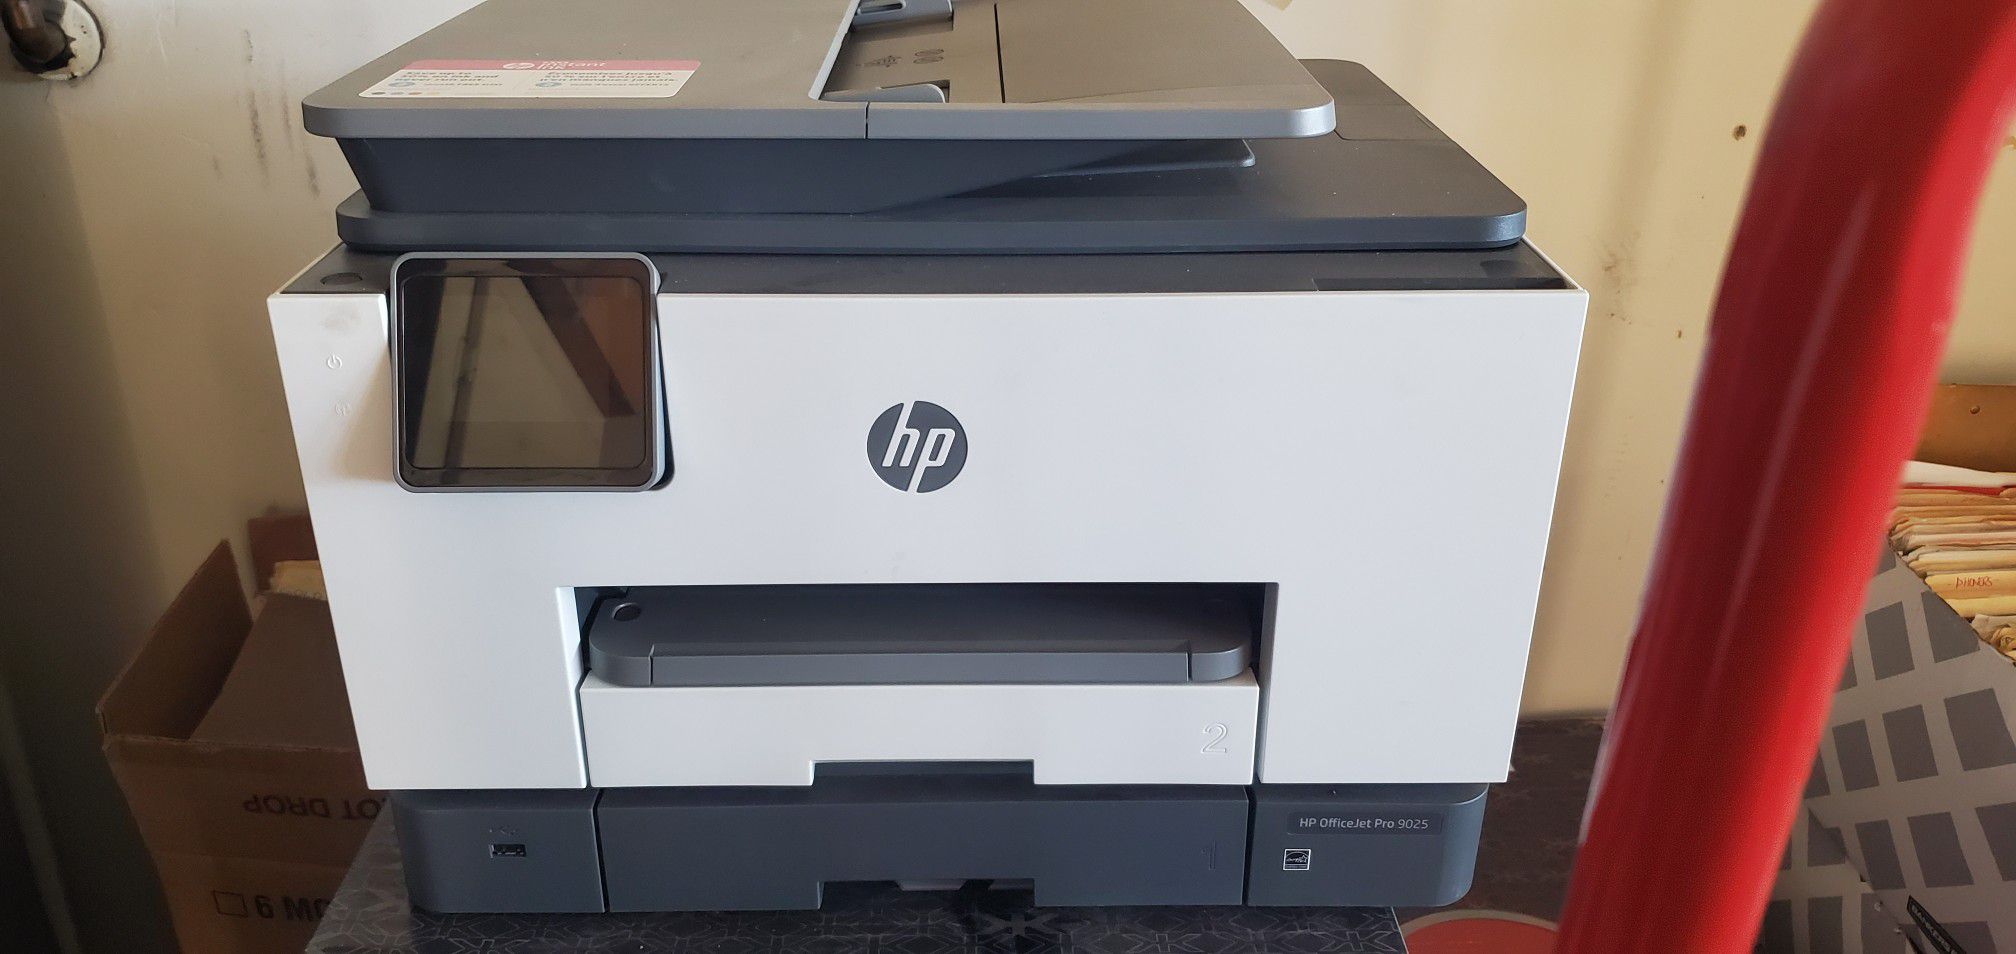 HP 9025 printer